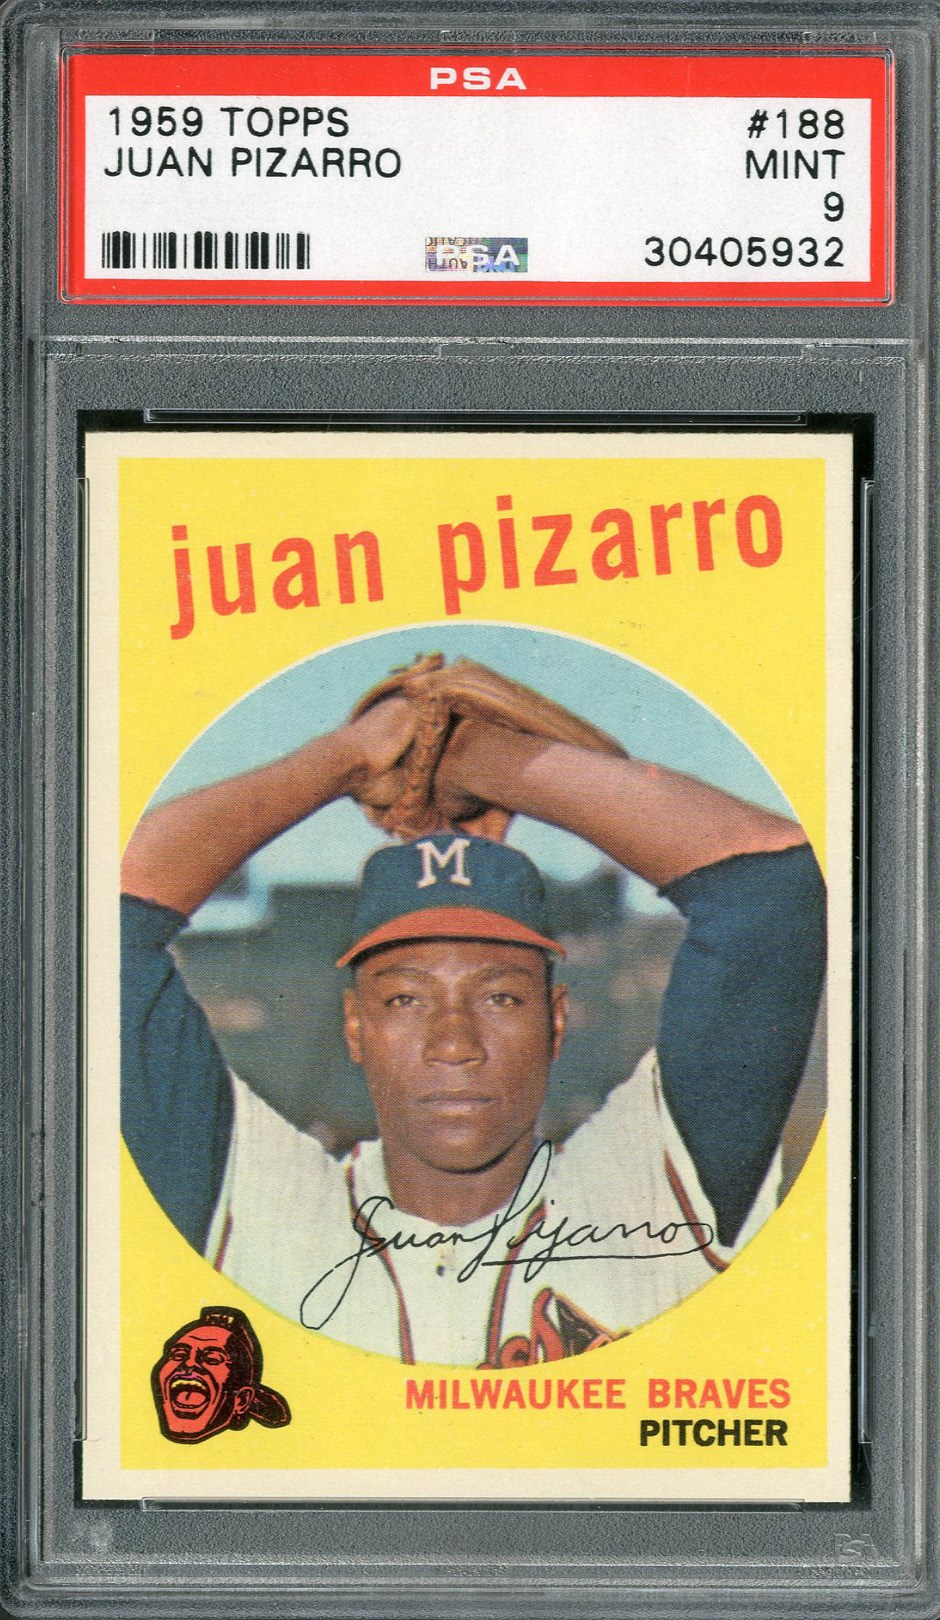 Baseball and Trading Cards - 1959 Topps #188 Juan Pizarro PSA MINT 9